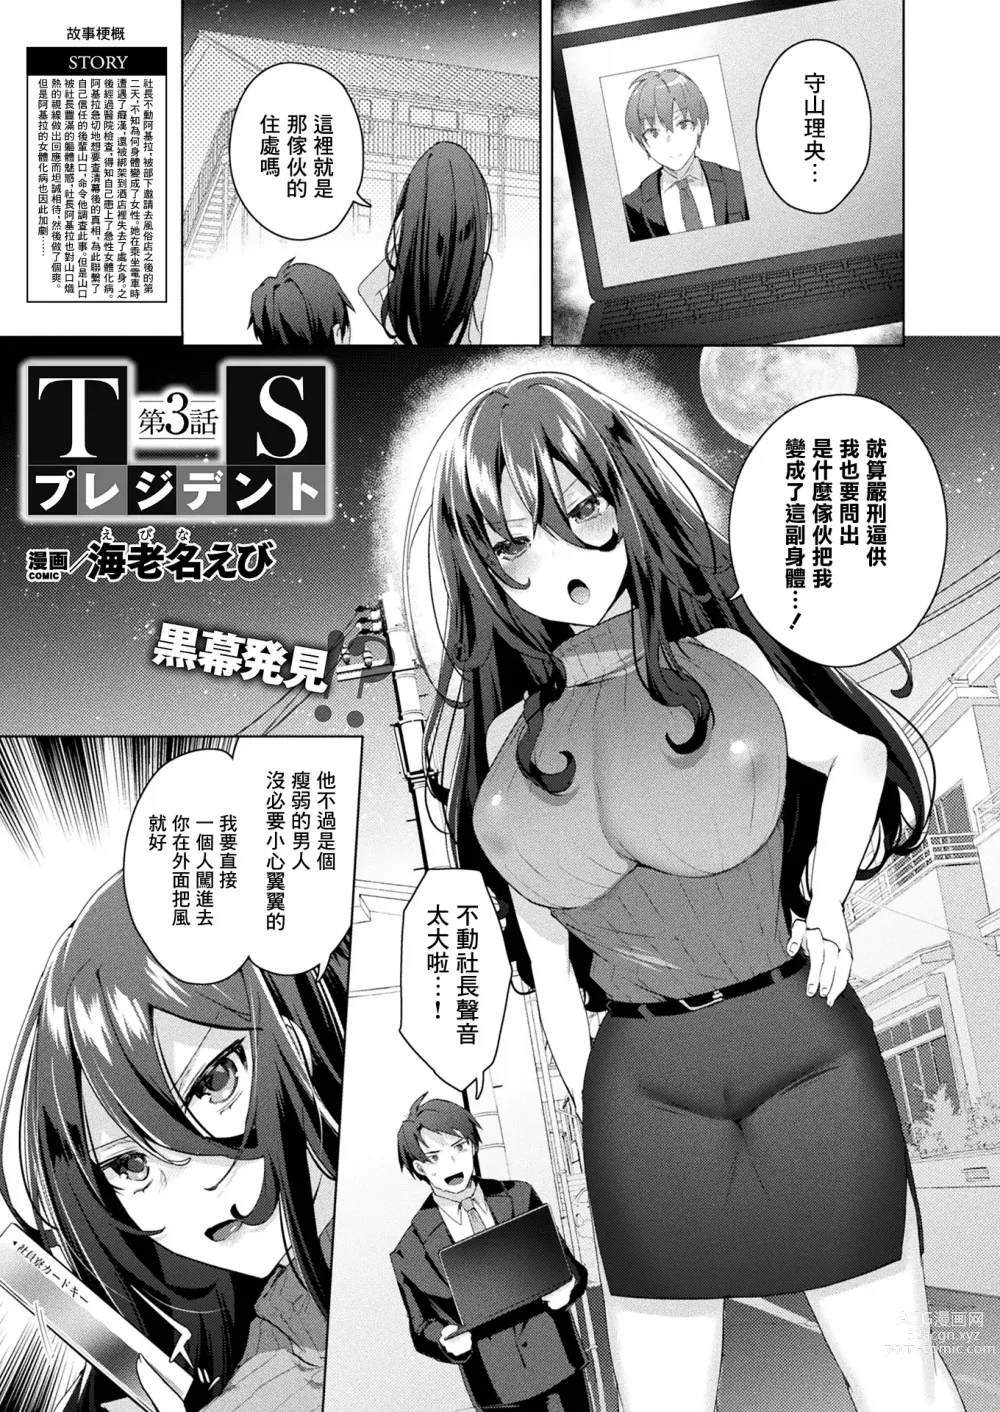 Page 2 of manga TS President Ch. 3